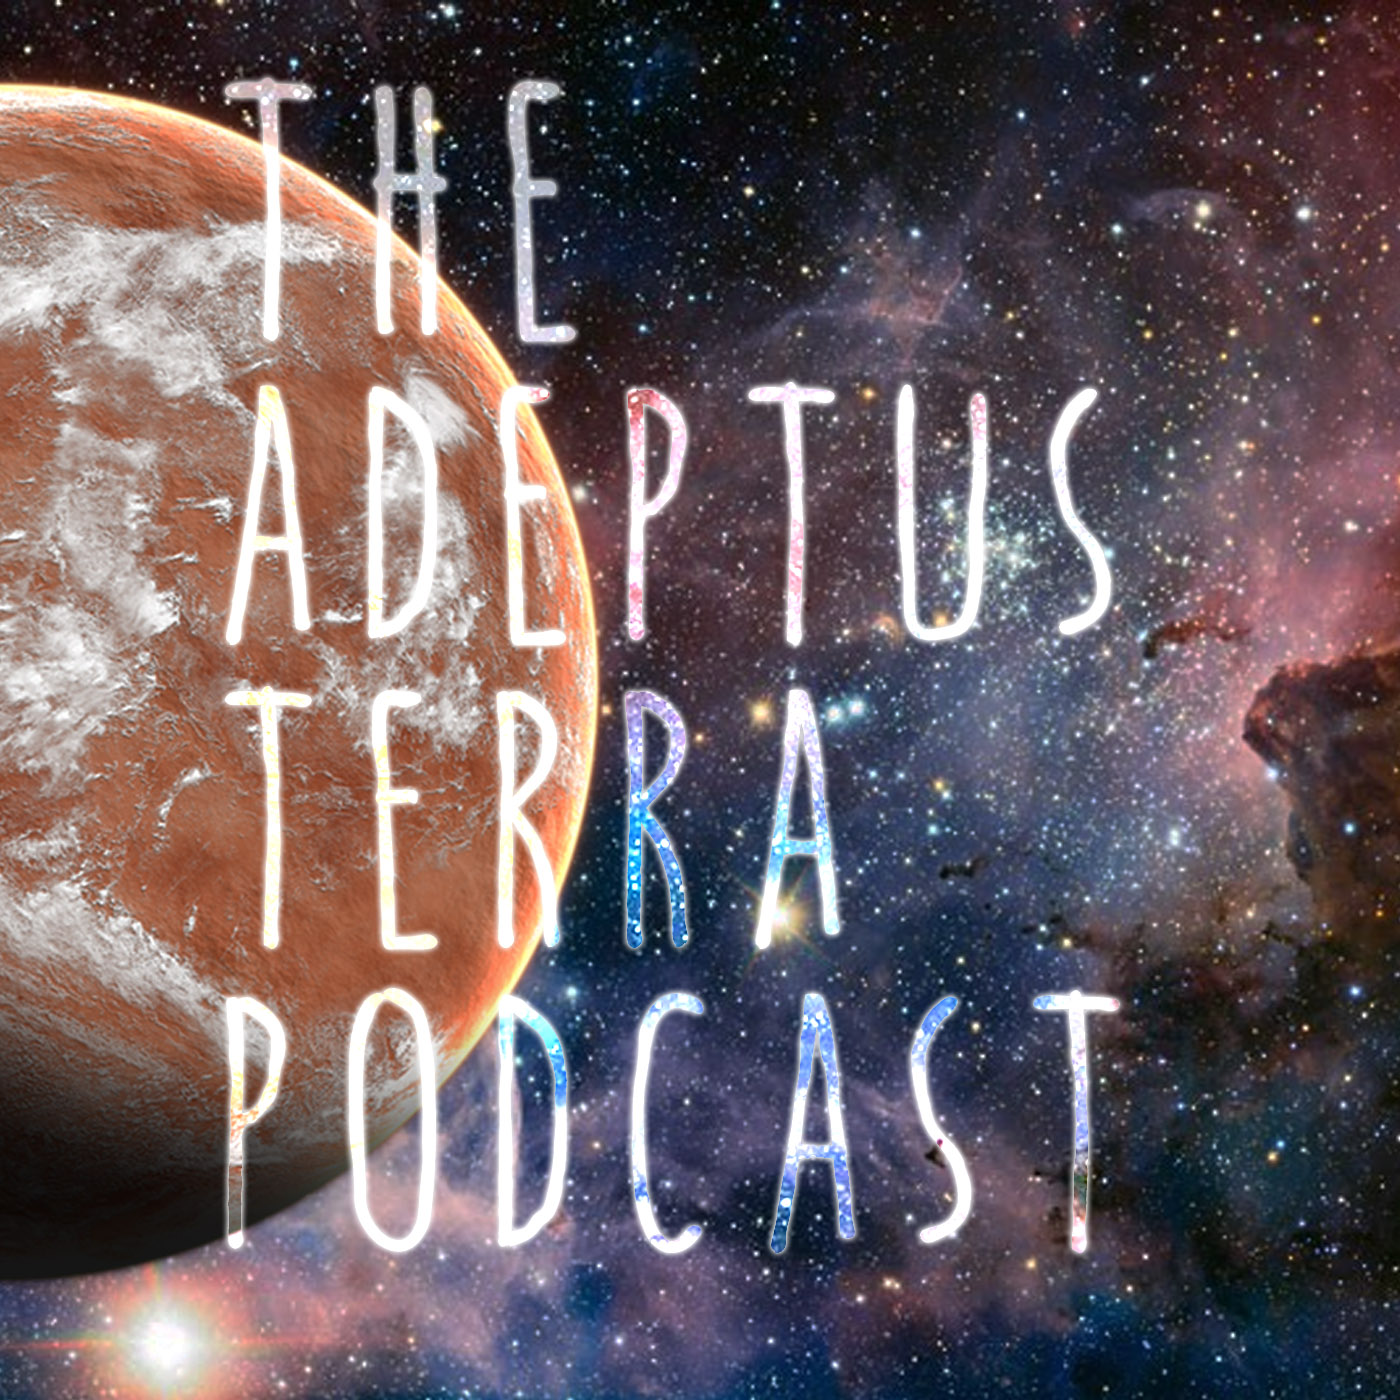 The Adeptus Terra Podcast Episode 11 'Super size me'